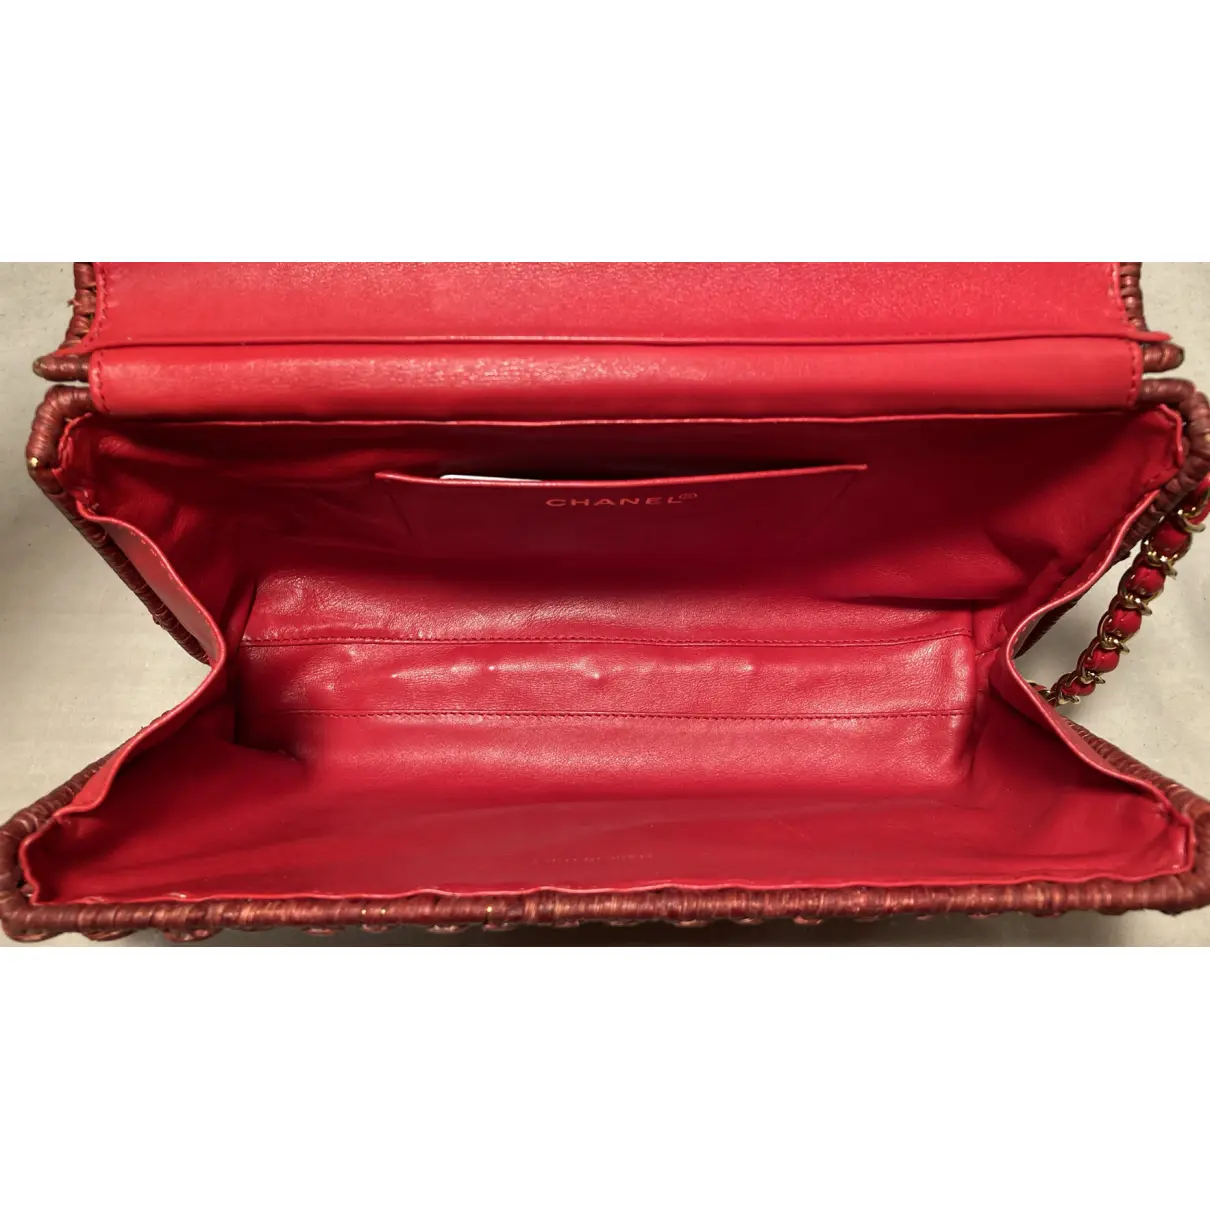 2.55 Long handbag Chanel